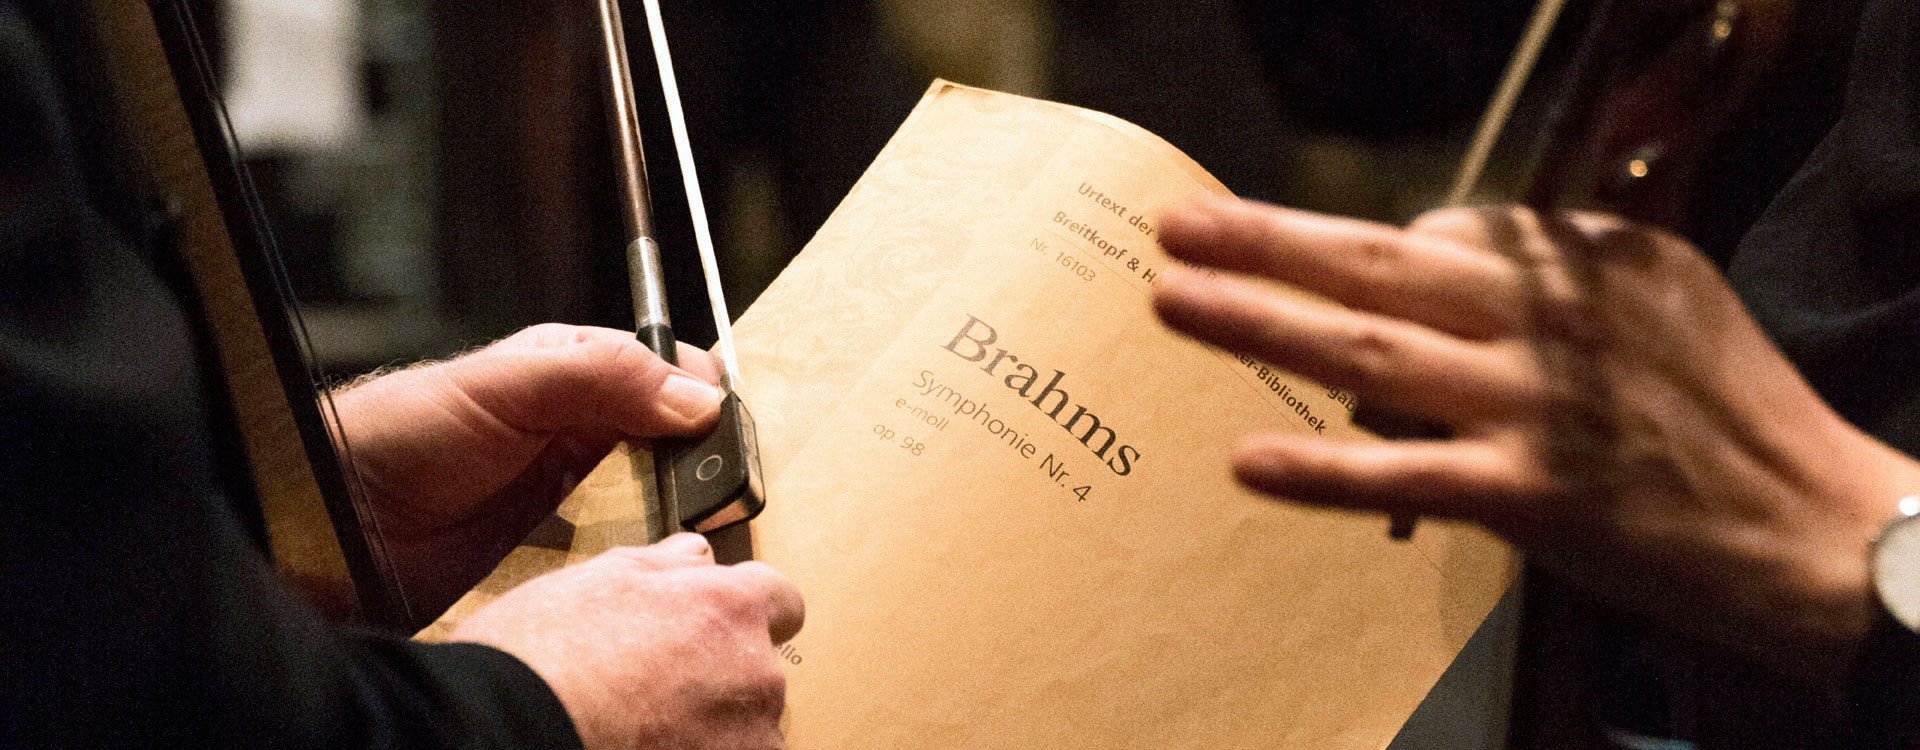 The Brahms Code